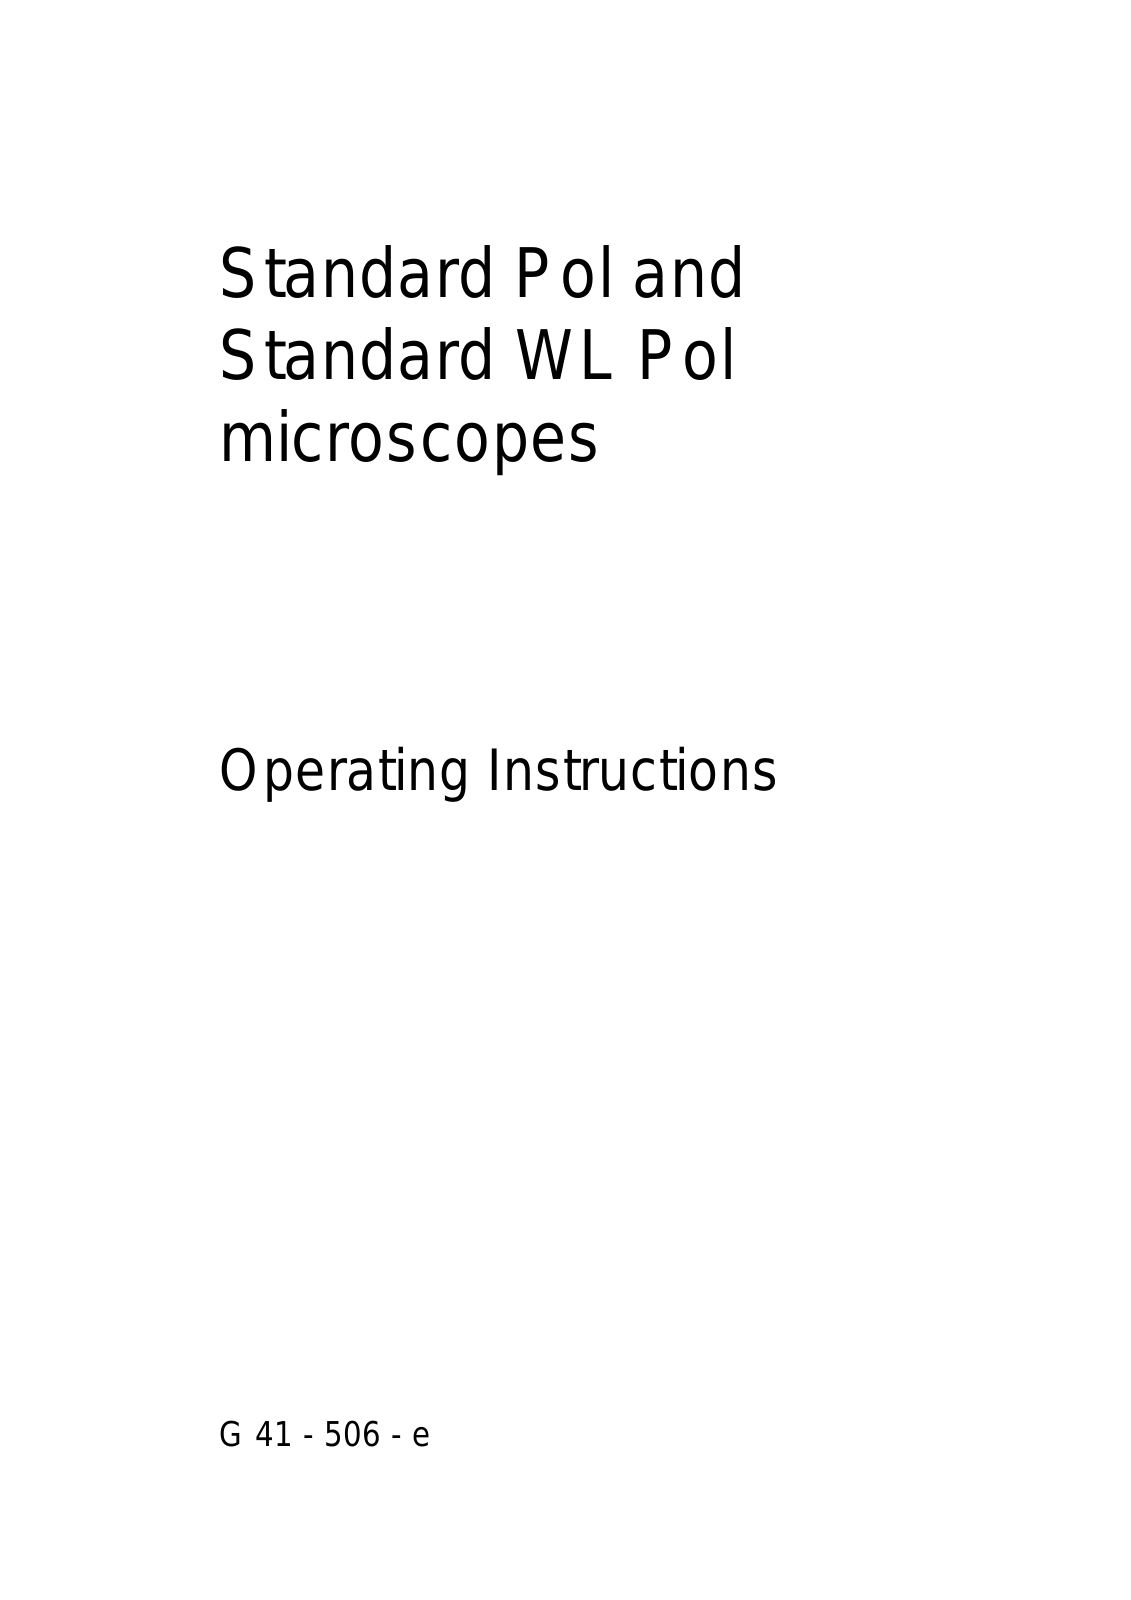 Zeiss Standard WL Pol, Standard Pol User Manual